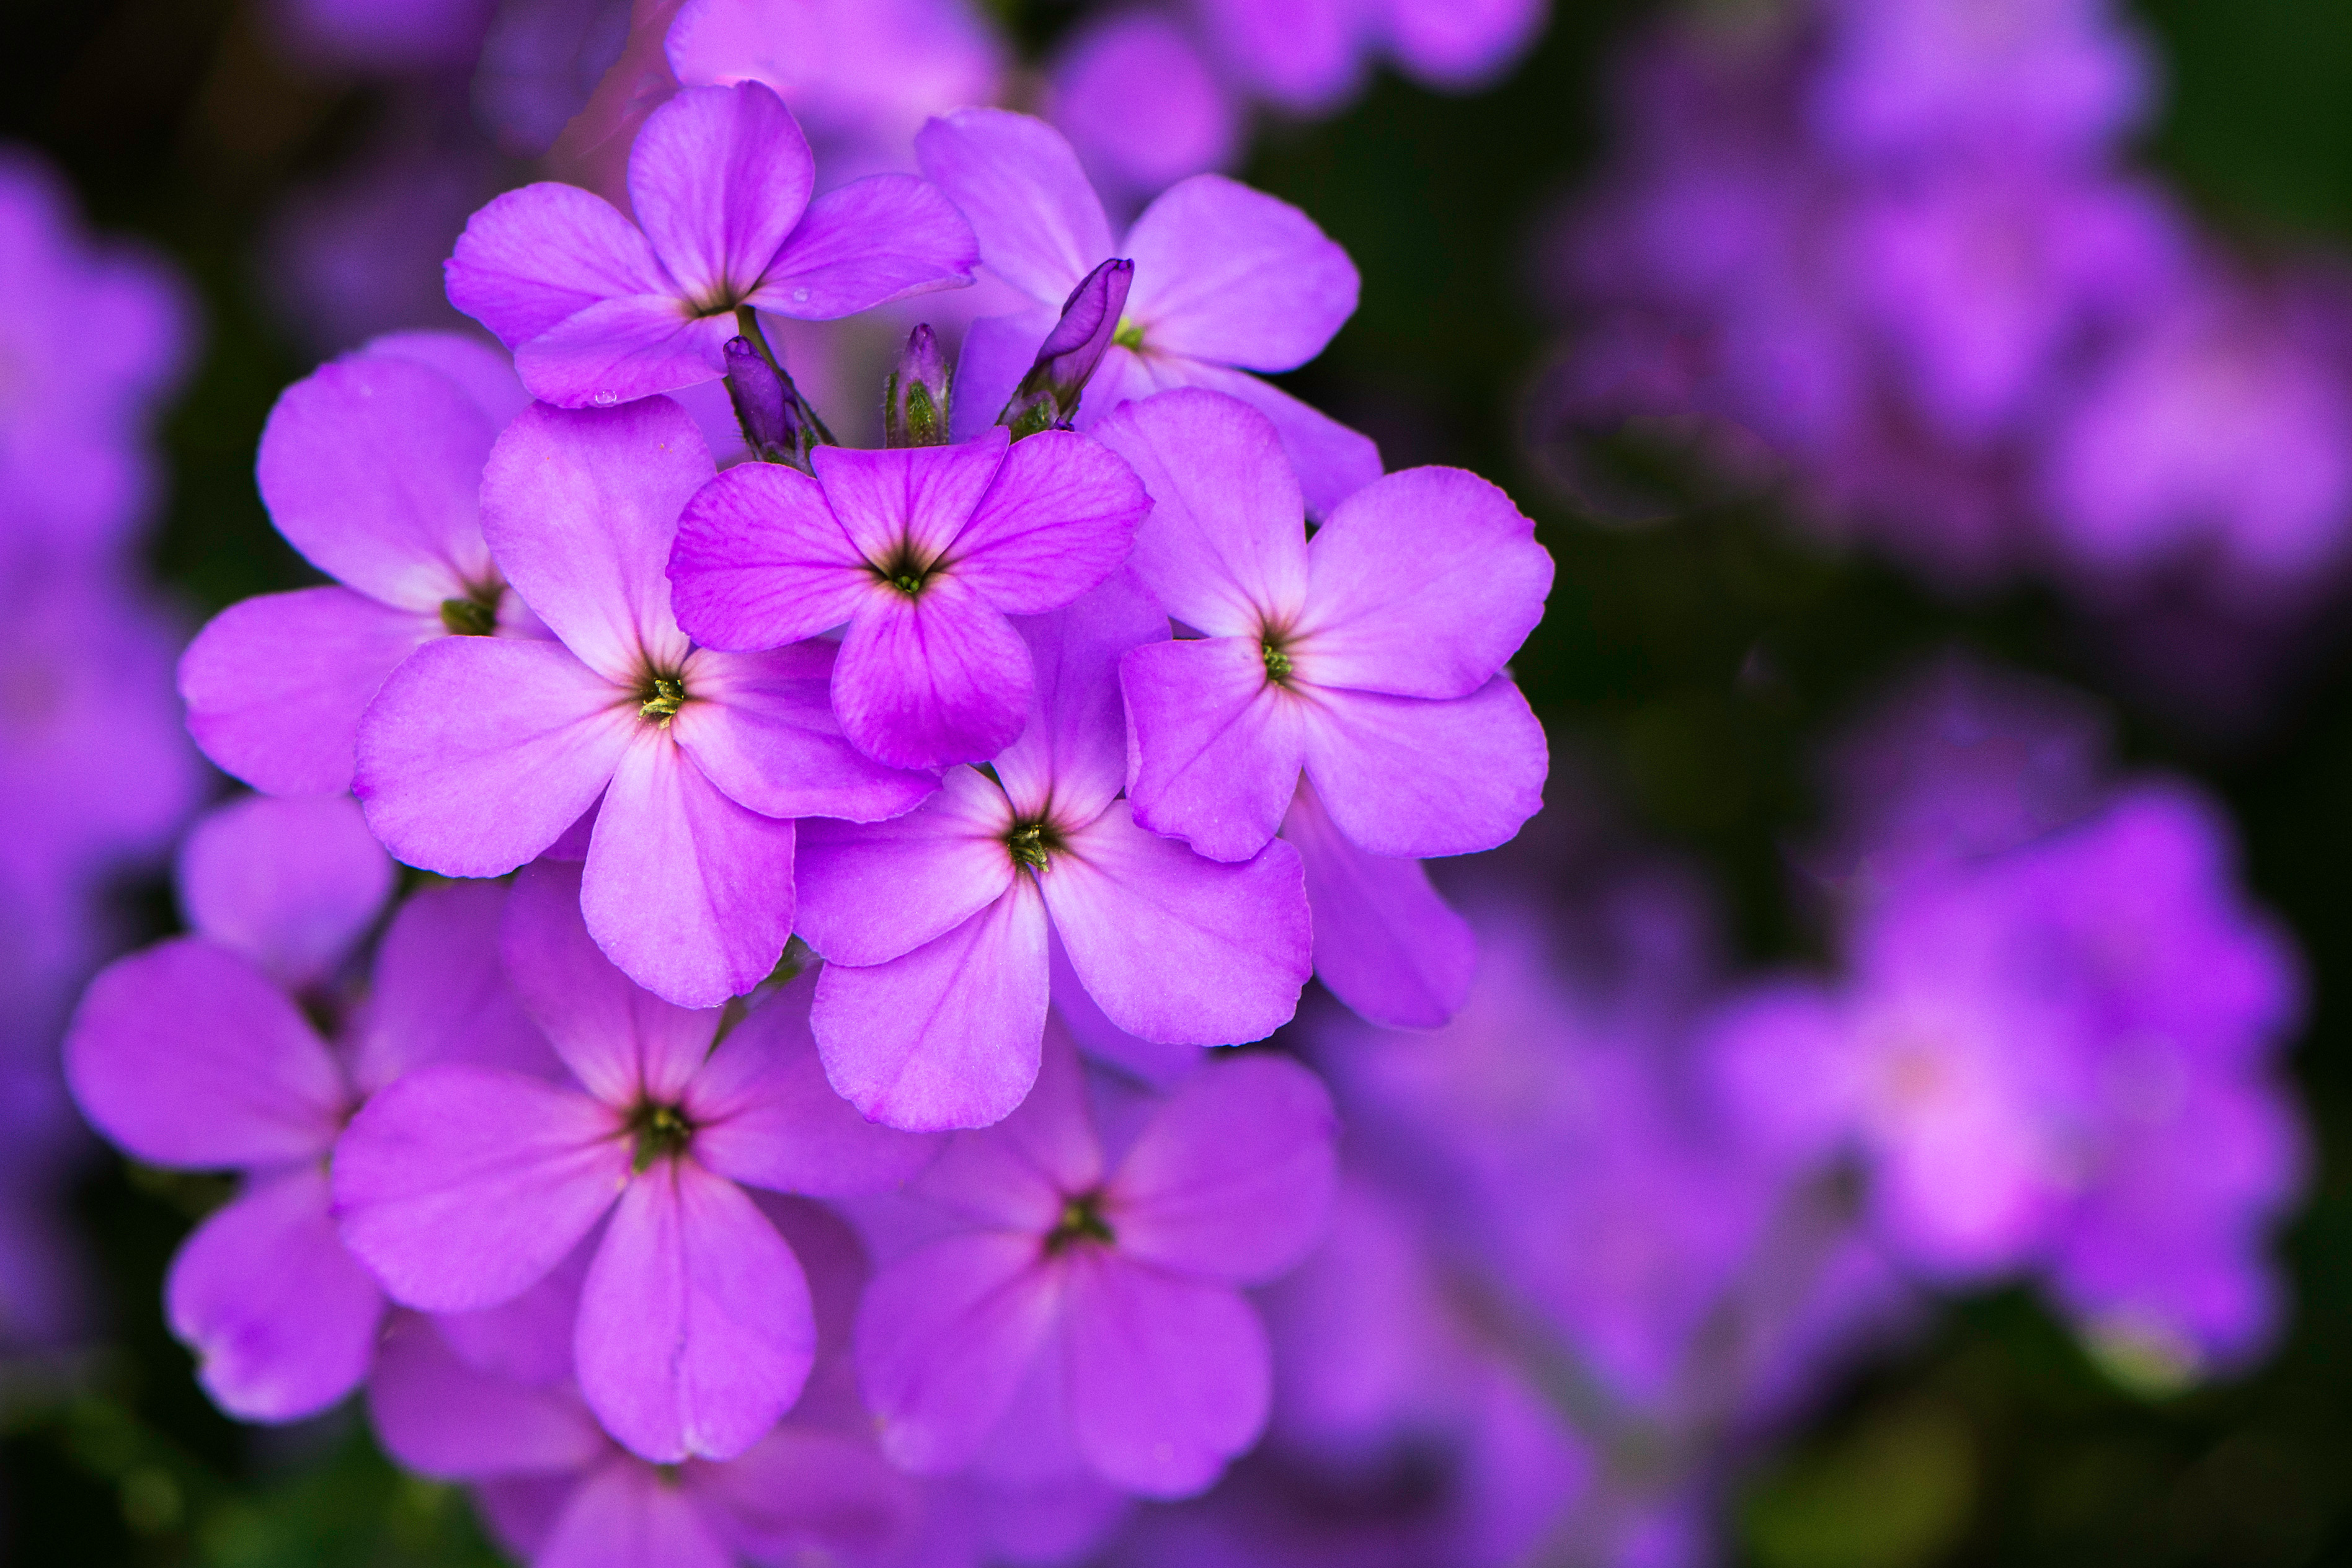 Violet Flower, Pansy Violet Flower On The Earth, #24736